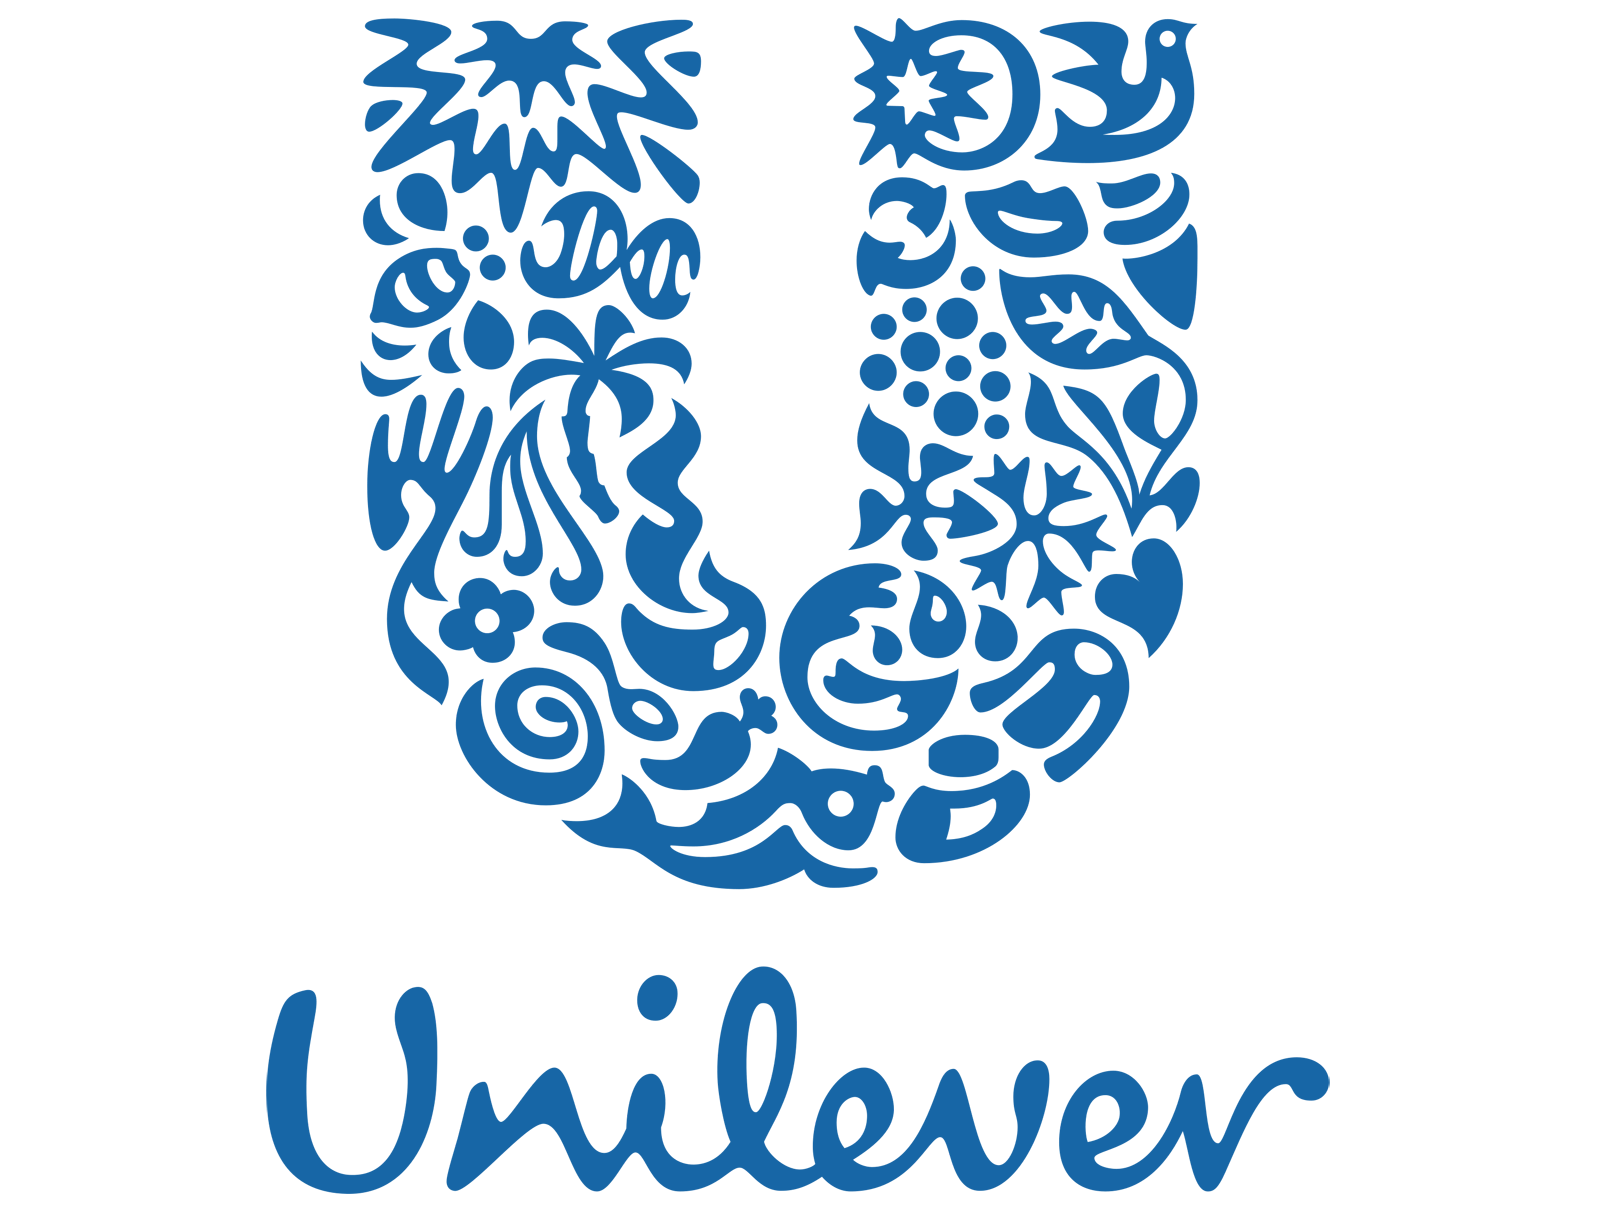 Unilever Logo Png Transparent